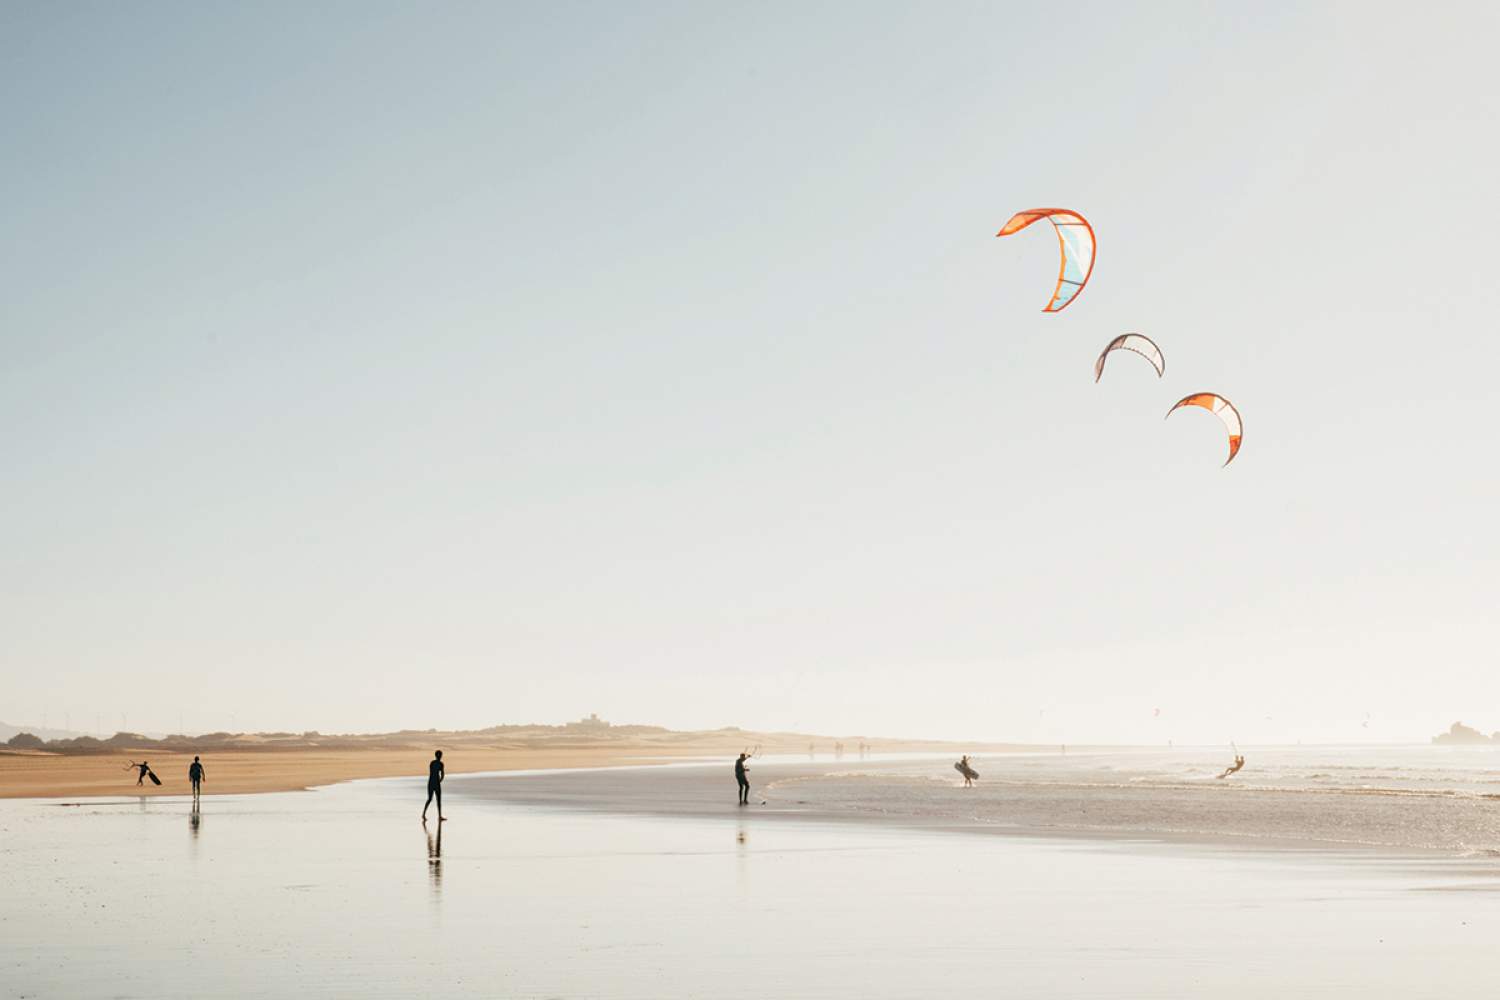 Kite surfing on Samana's beaches